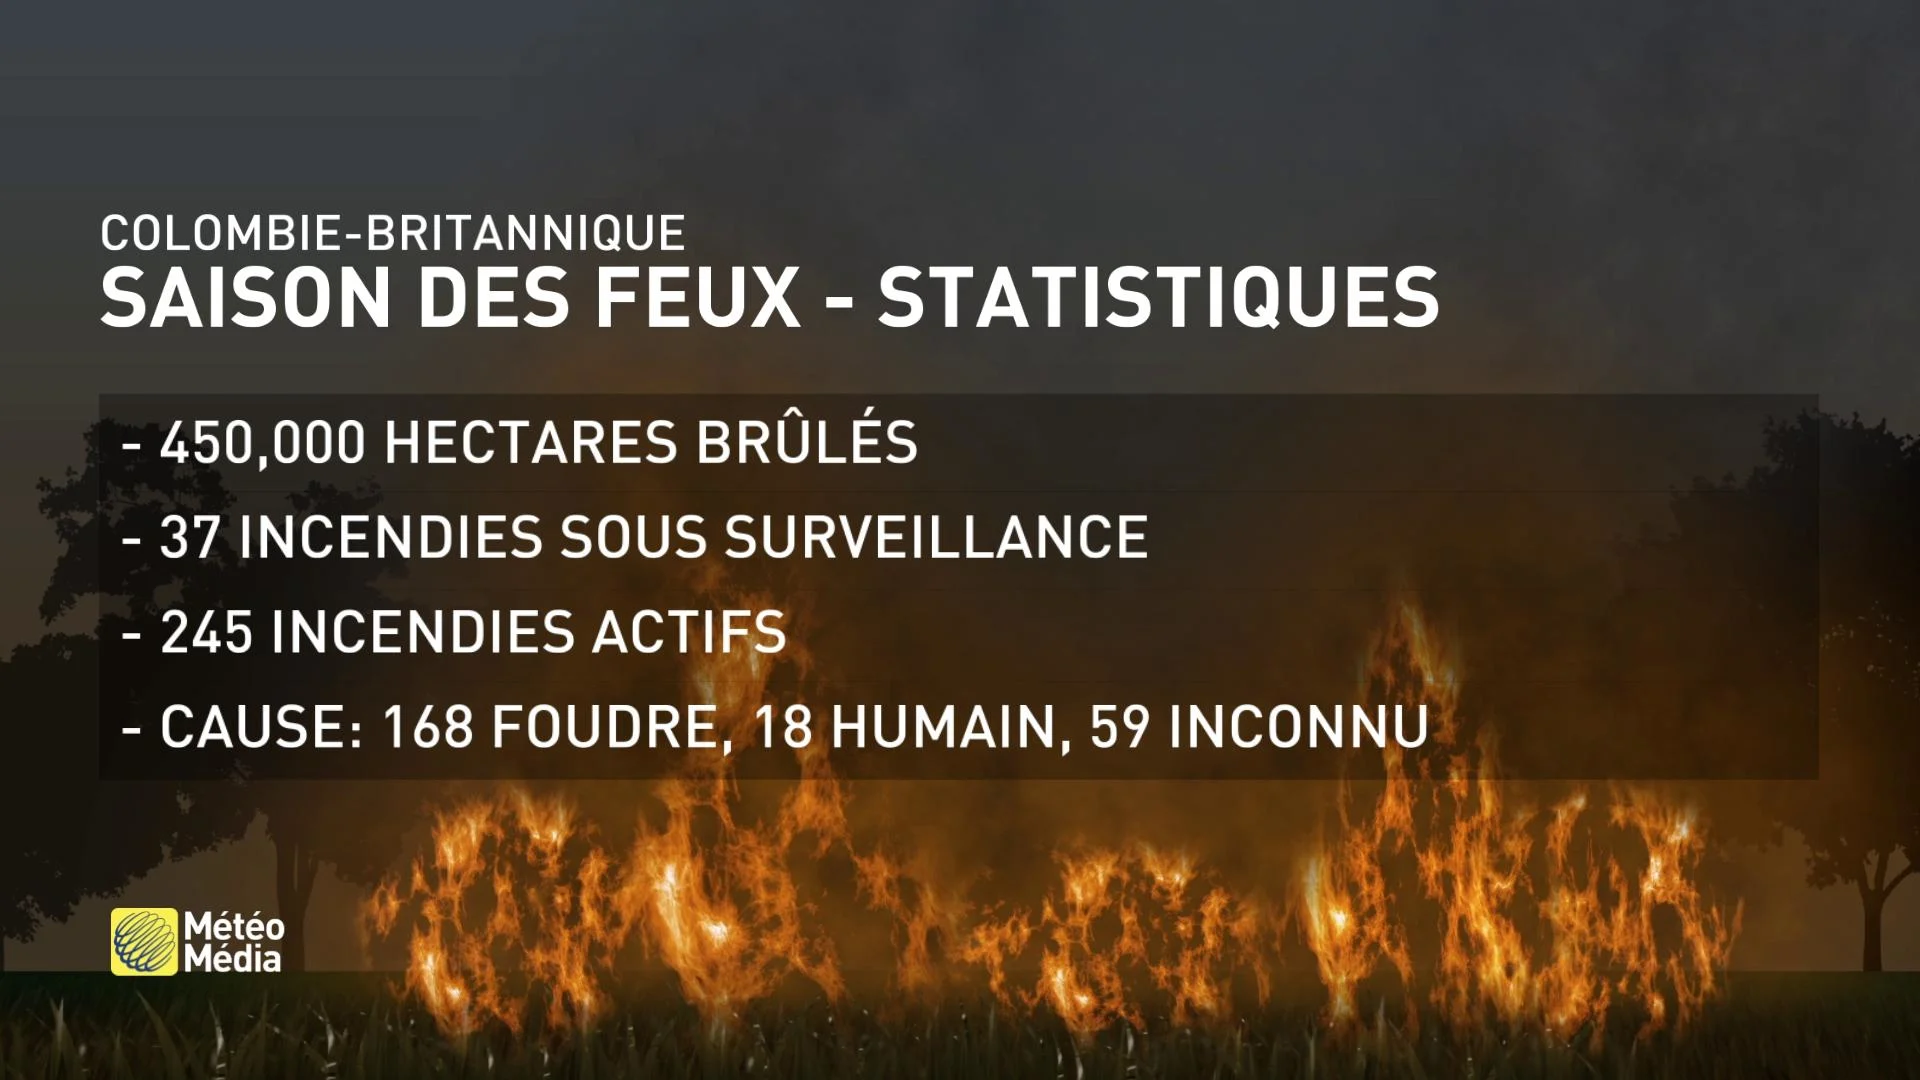 FEUX STATISTIQUES